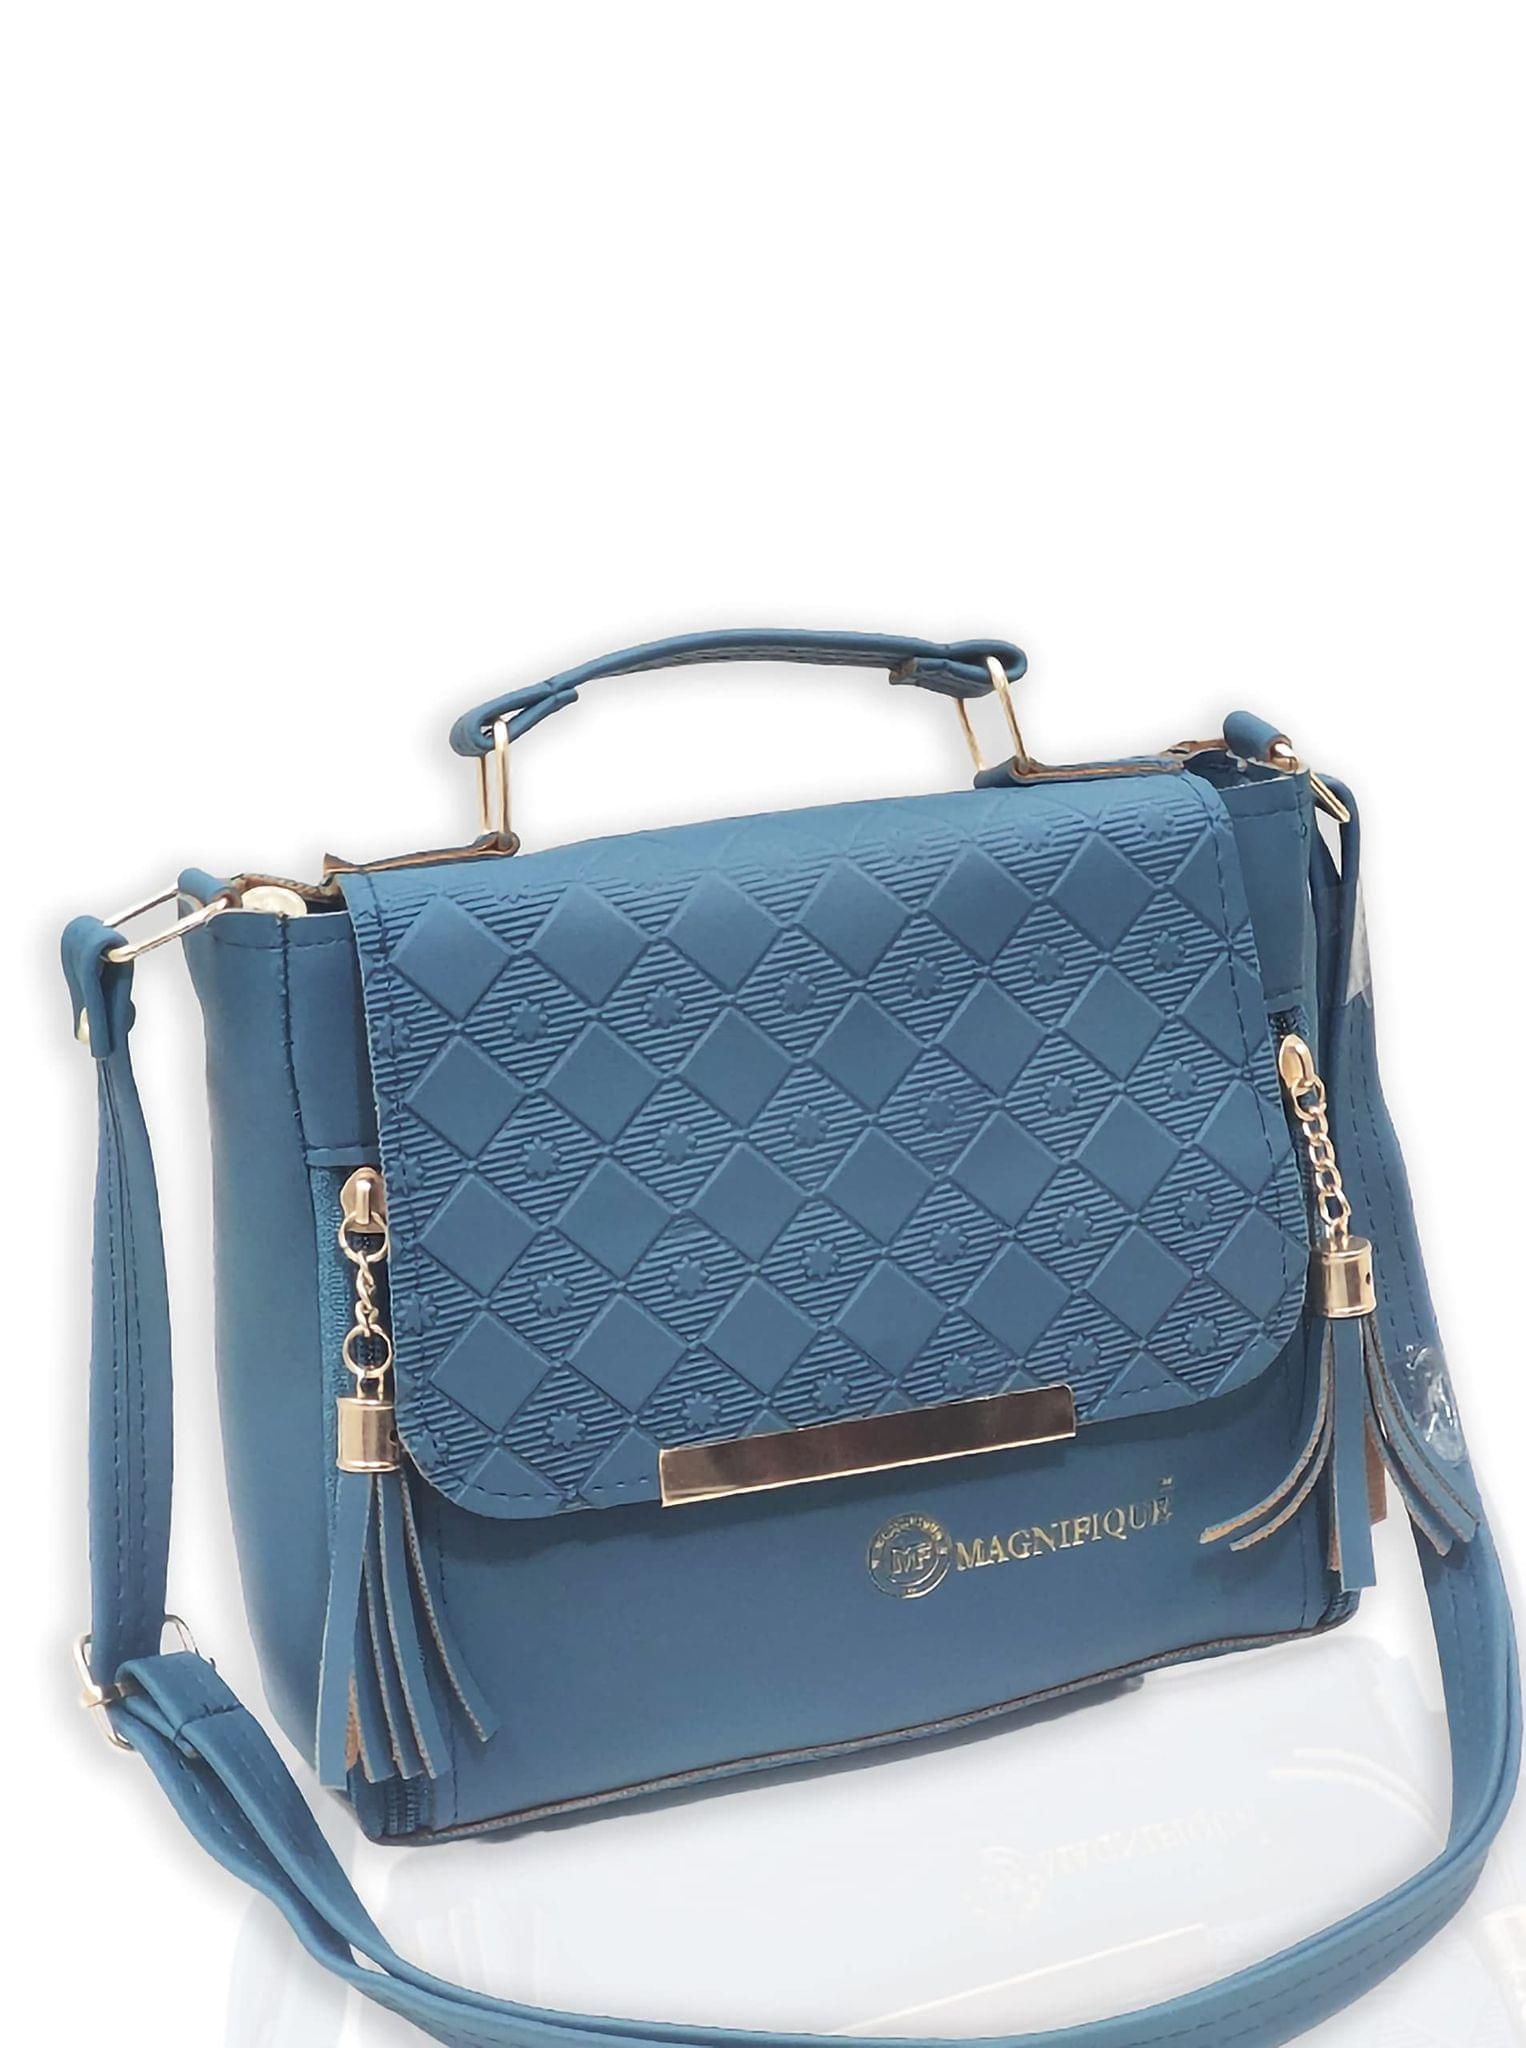 Liz Claiborne blue crossbody purse - clothing & accessories - by owner -  apparel sale - craigslist